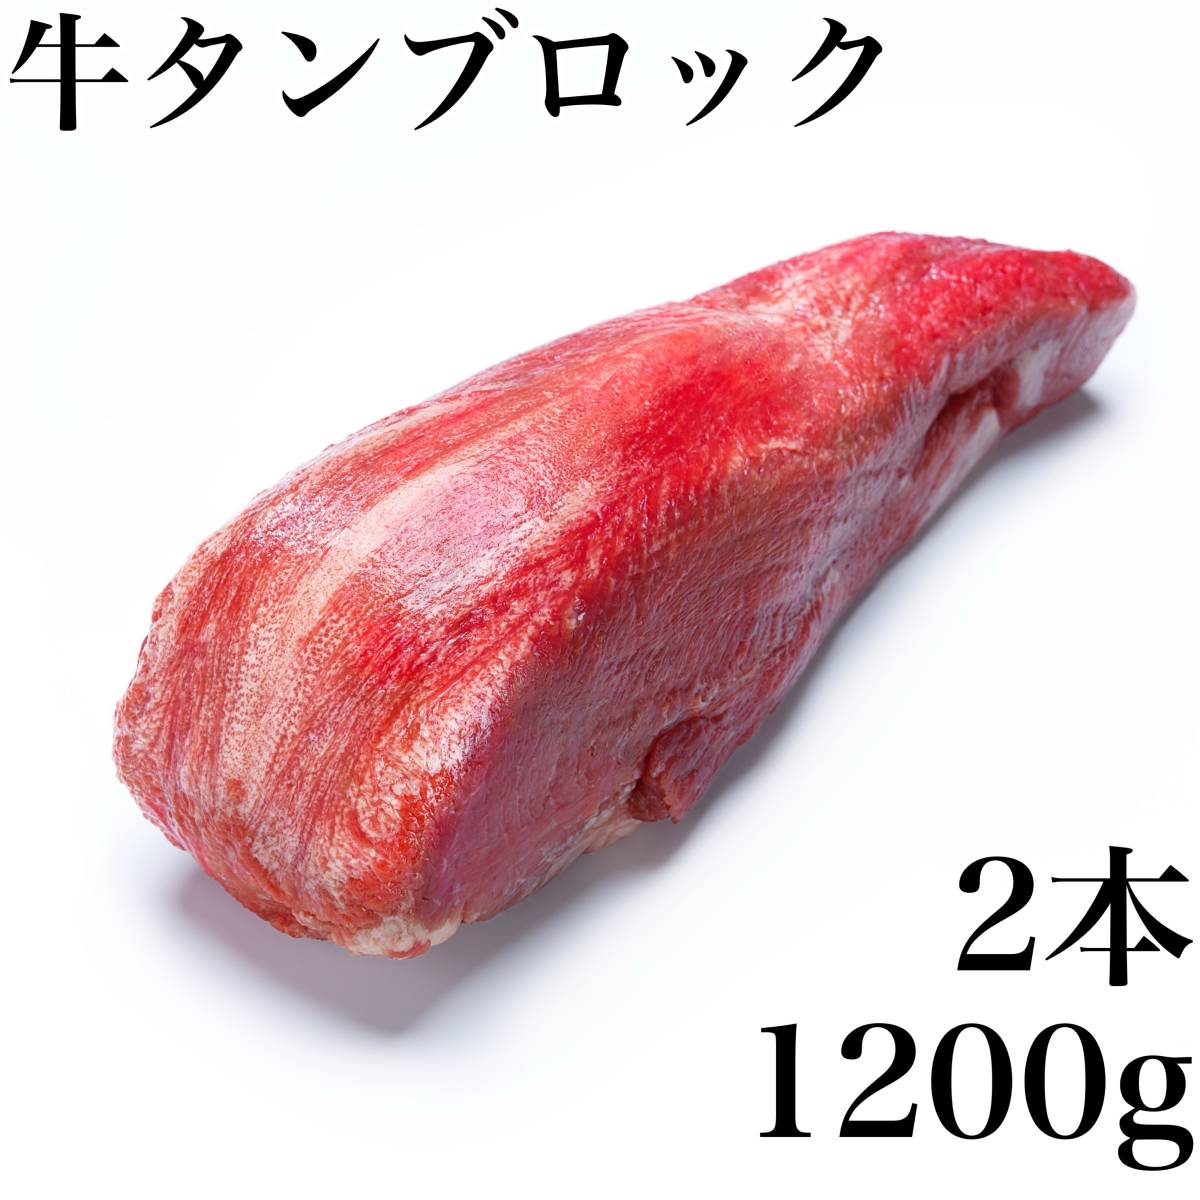  cow mki tongue block 2 pcs set (1200g) business use yakiniku BBQ steak prompt decision nikomi . meat cow tongue cow .. beef cow tongue block 